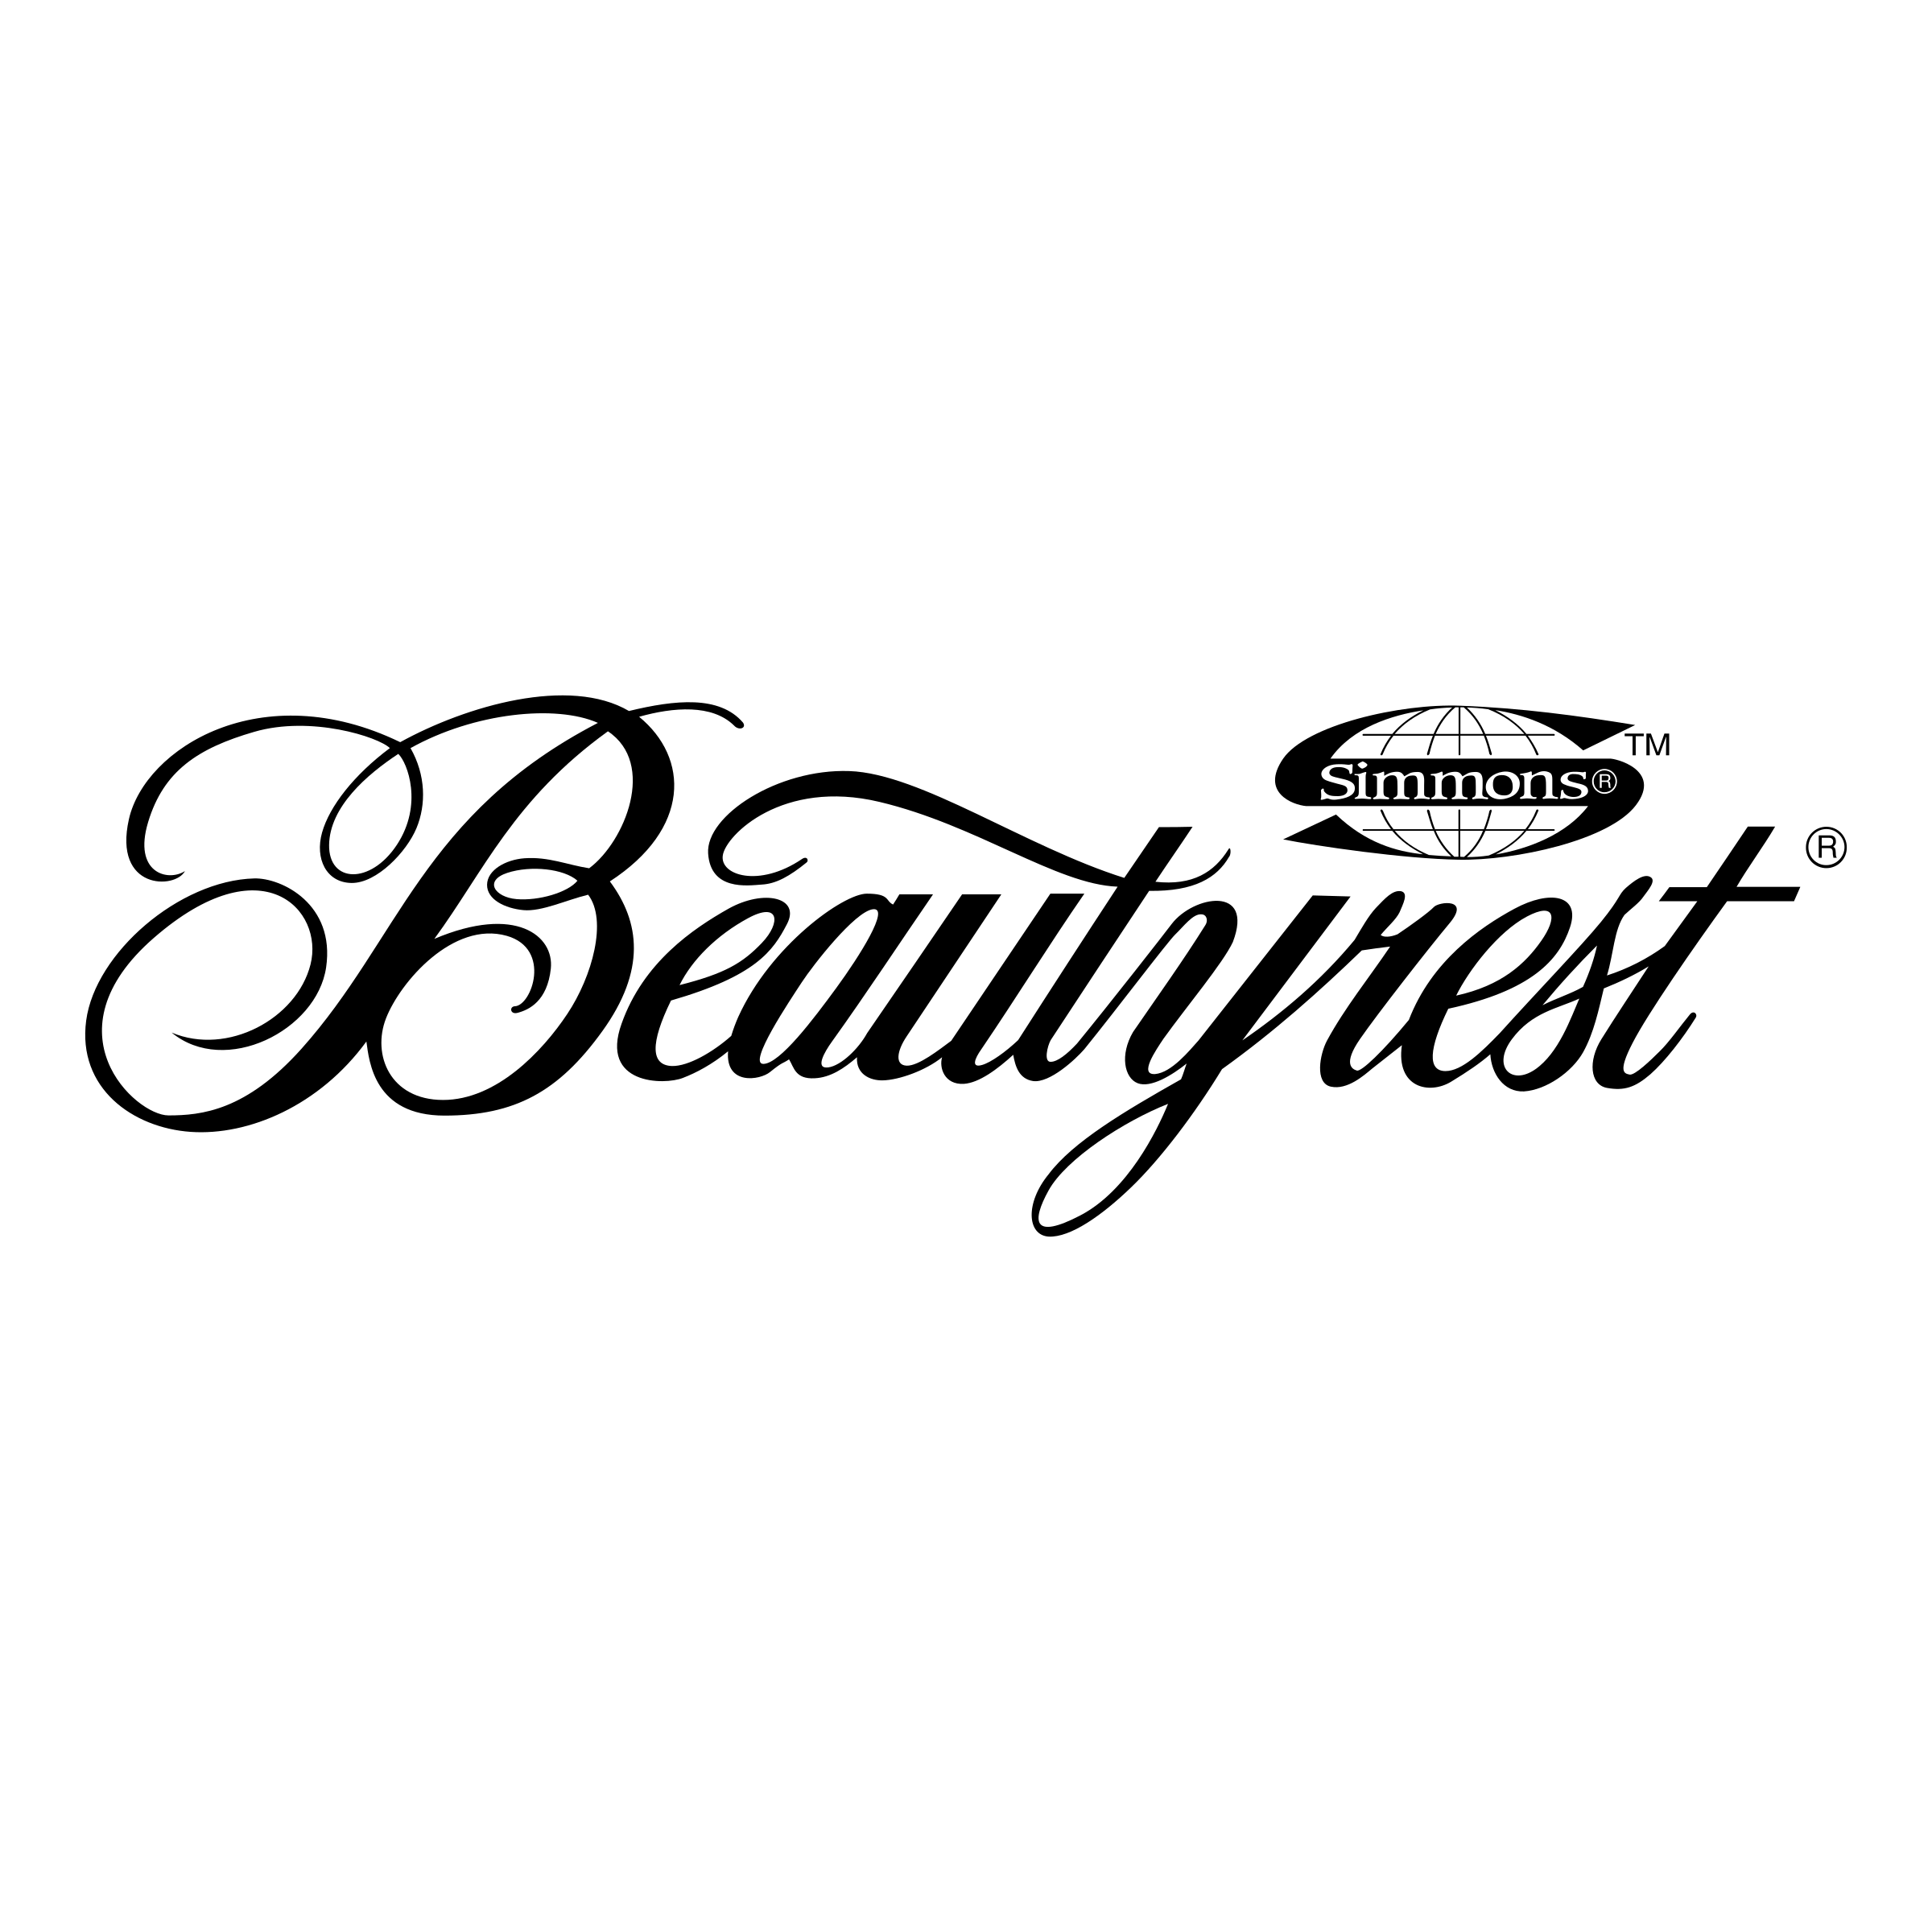 Beautyrest Logo - Beautyrest Logo PNG Transparent & SVG Vector - Freebie Supply